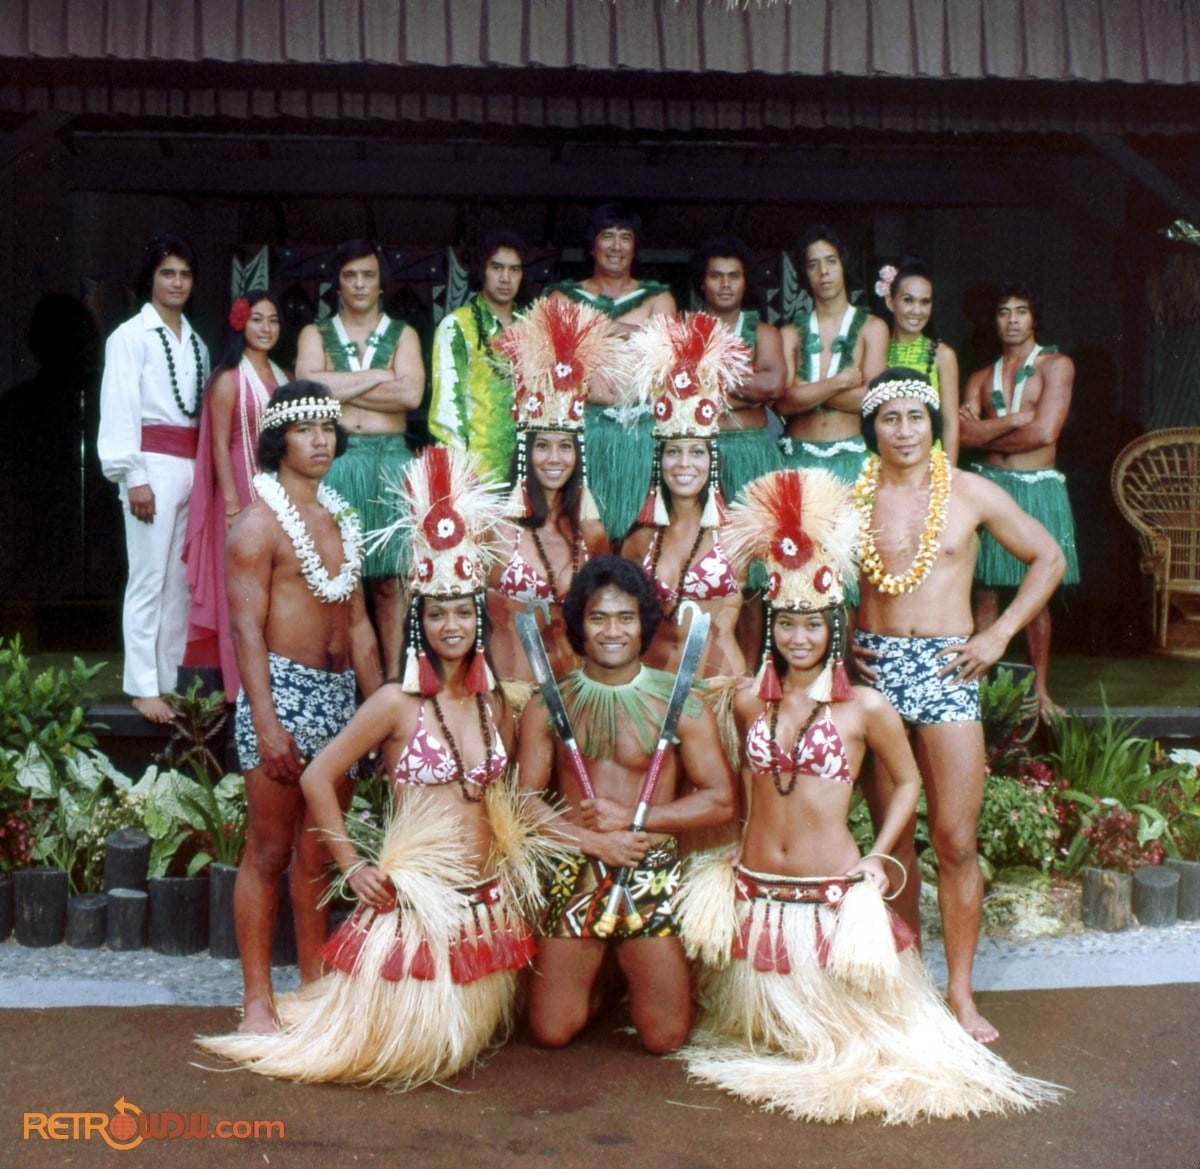 disney's polynesian resort luau